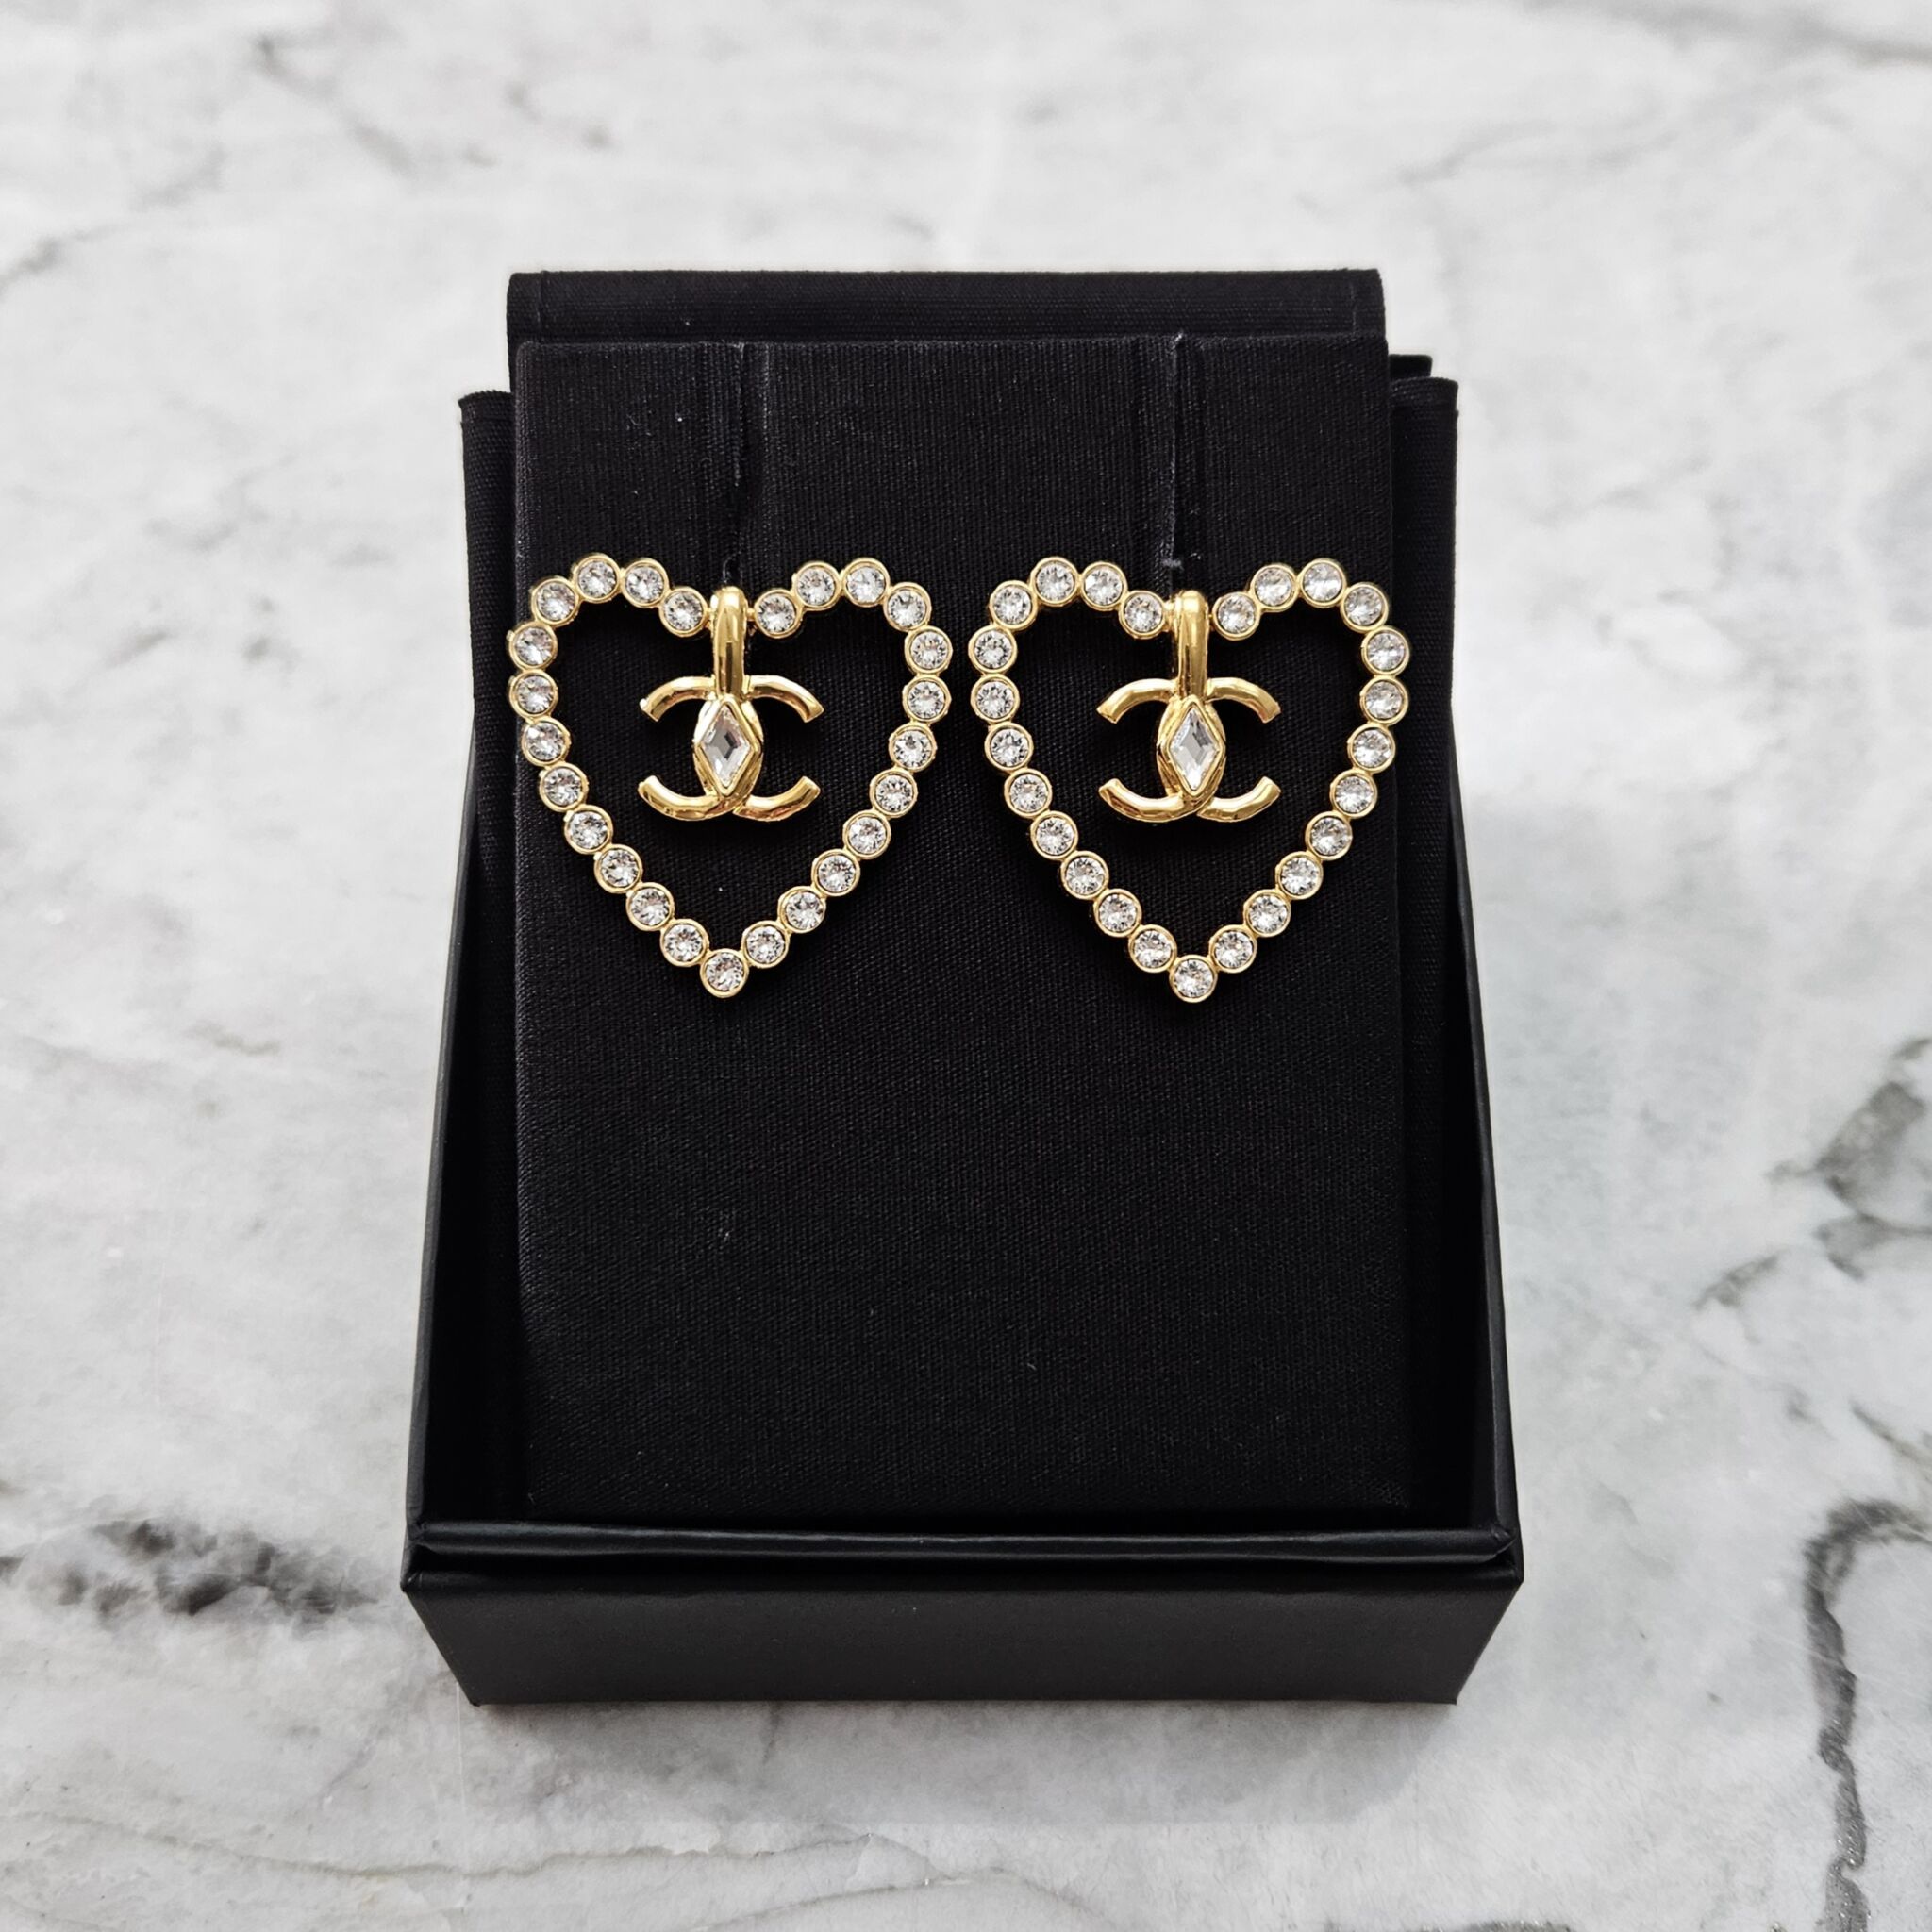 CHANEL, Jewelry, Chanel Cc Crystal Earrings 23b